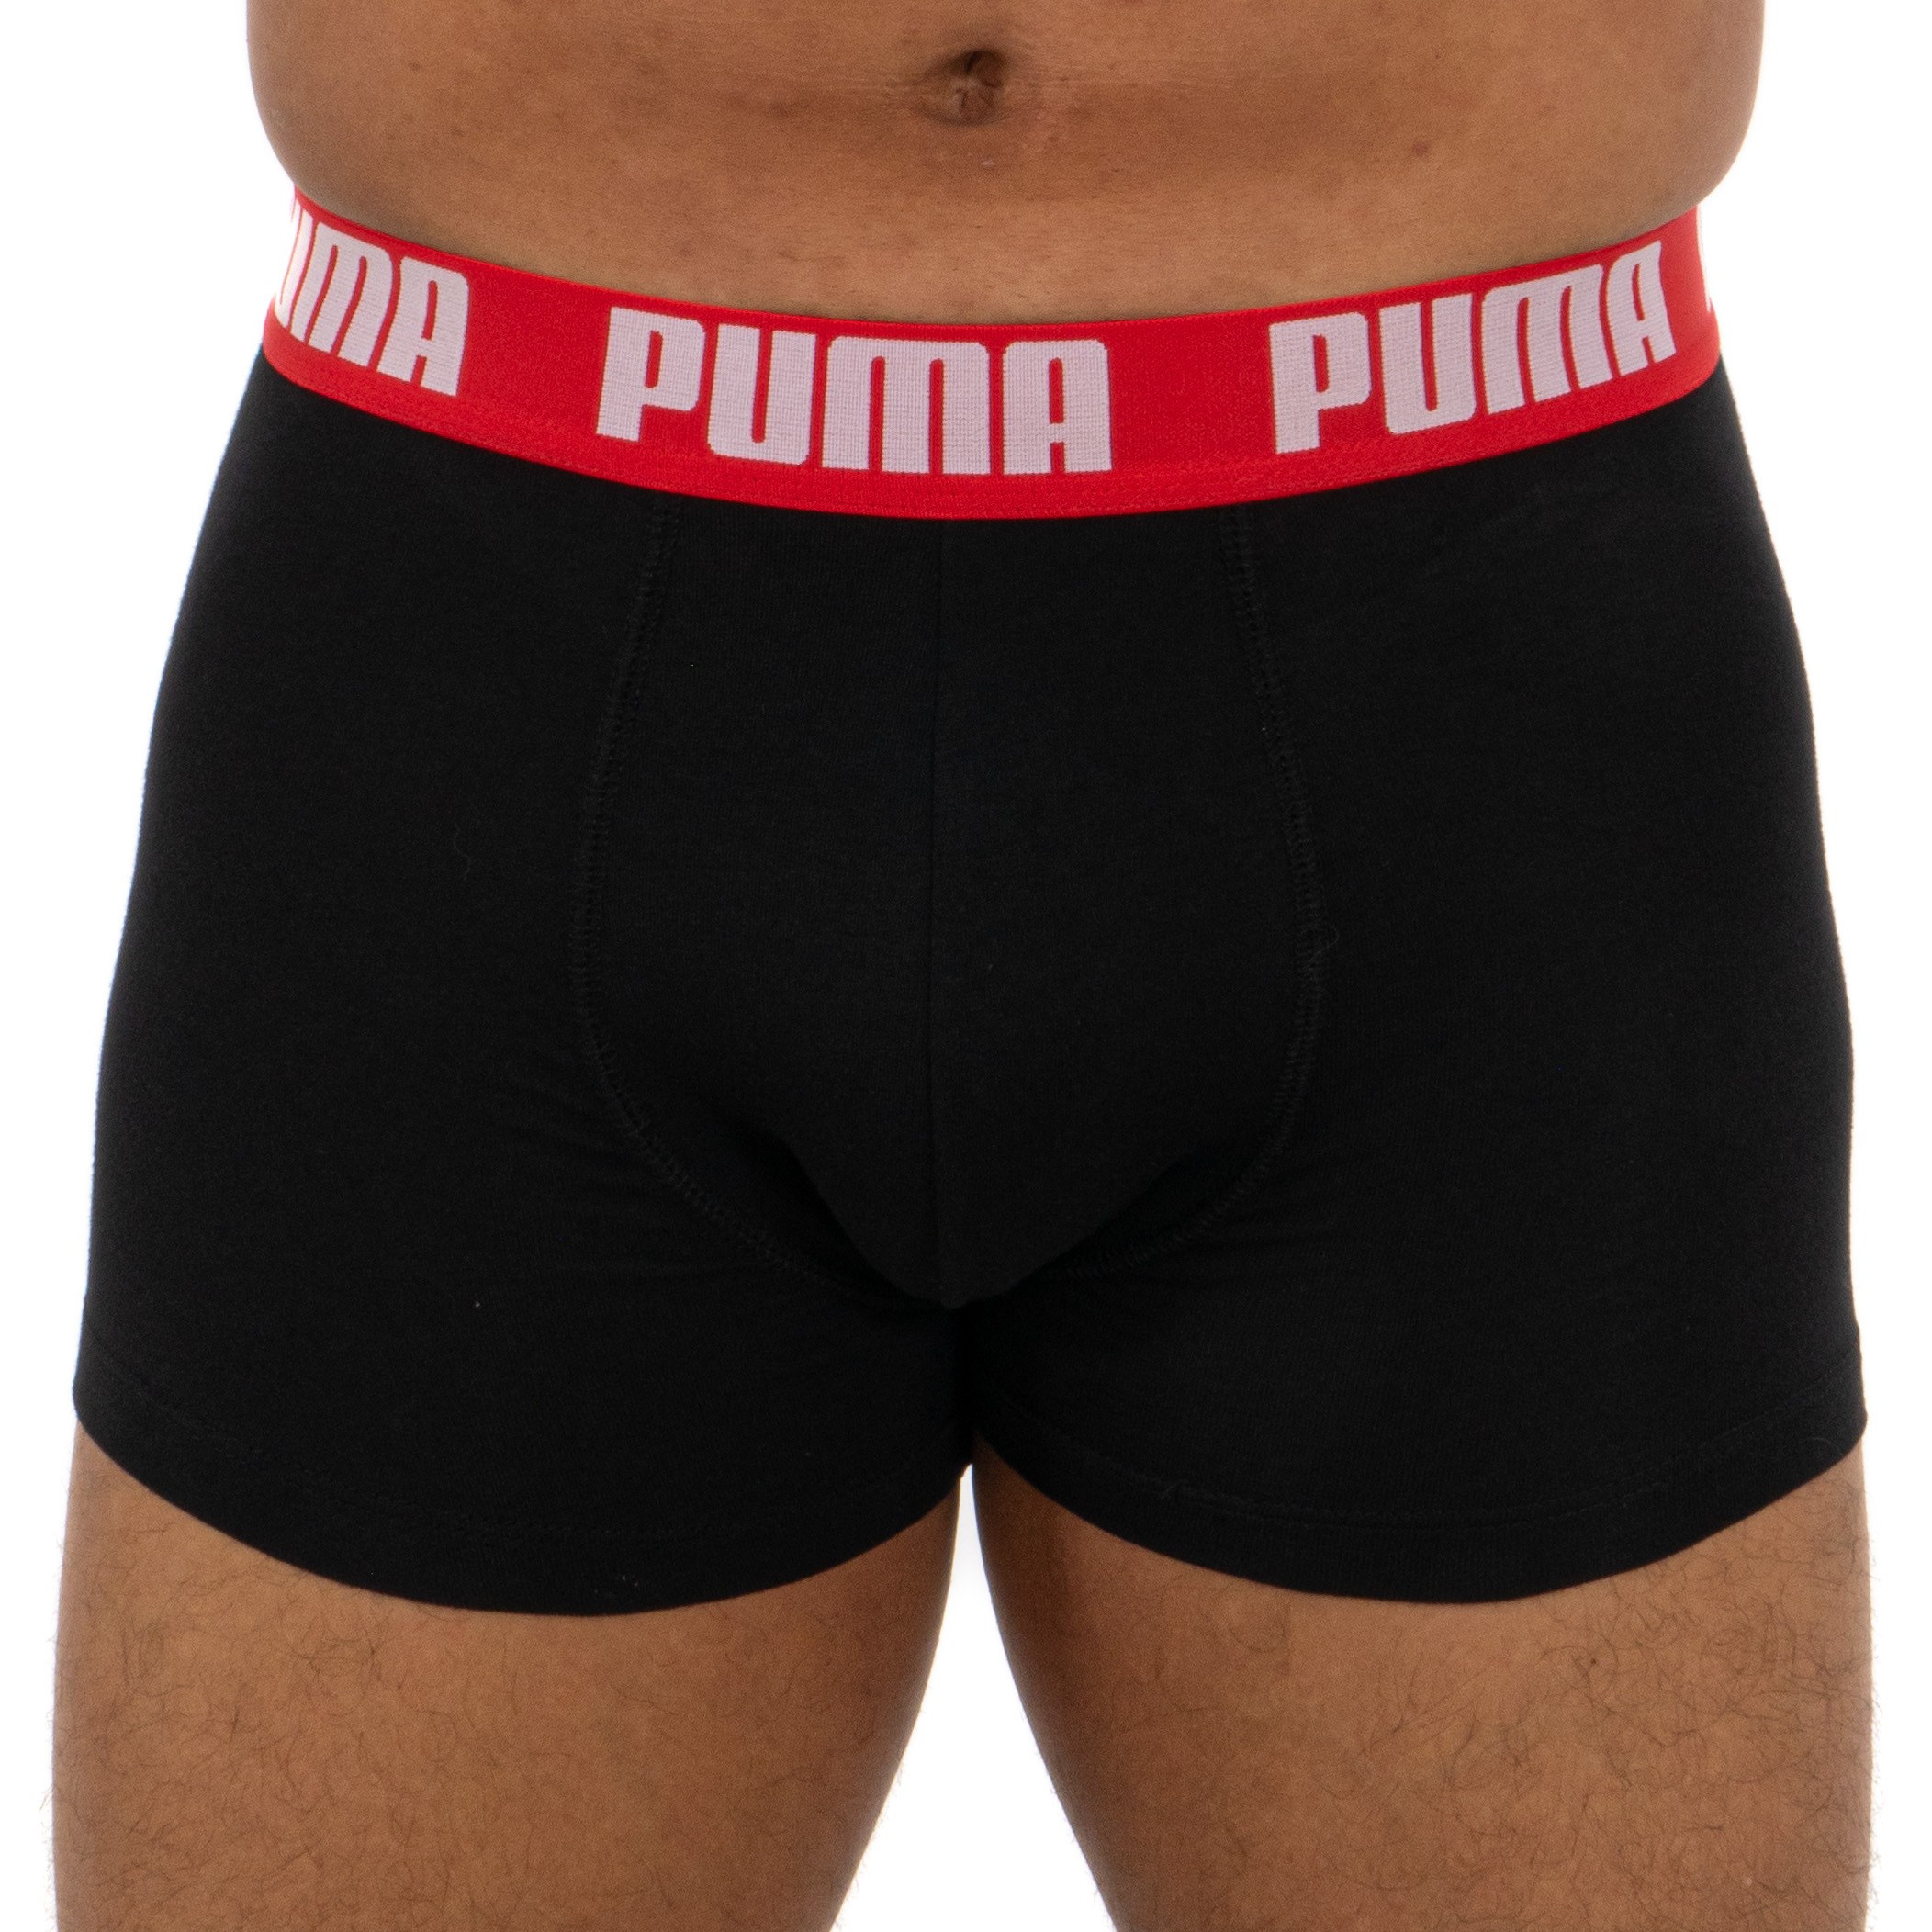 verkoper pols tentoonstelling Basic Boxer Shorts 2 Pack - red and black: Packs for man brand Puma...